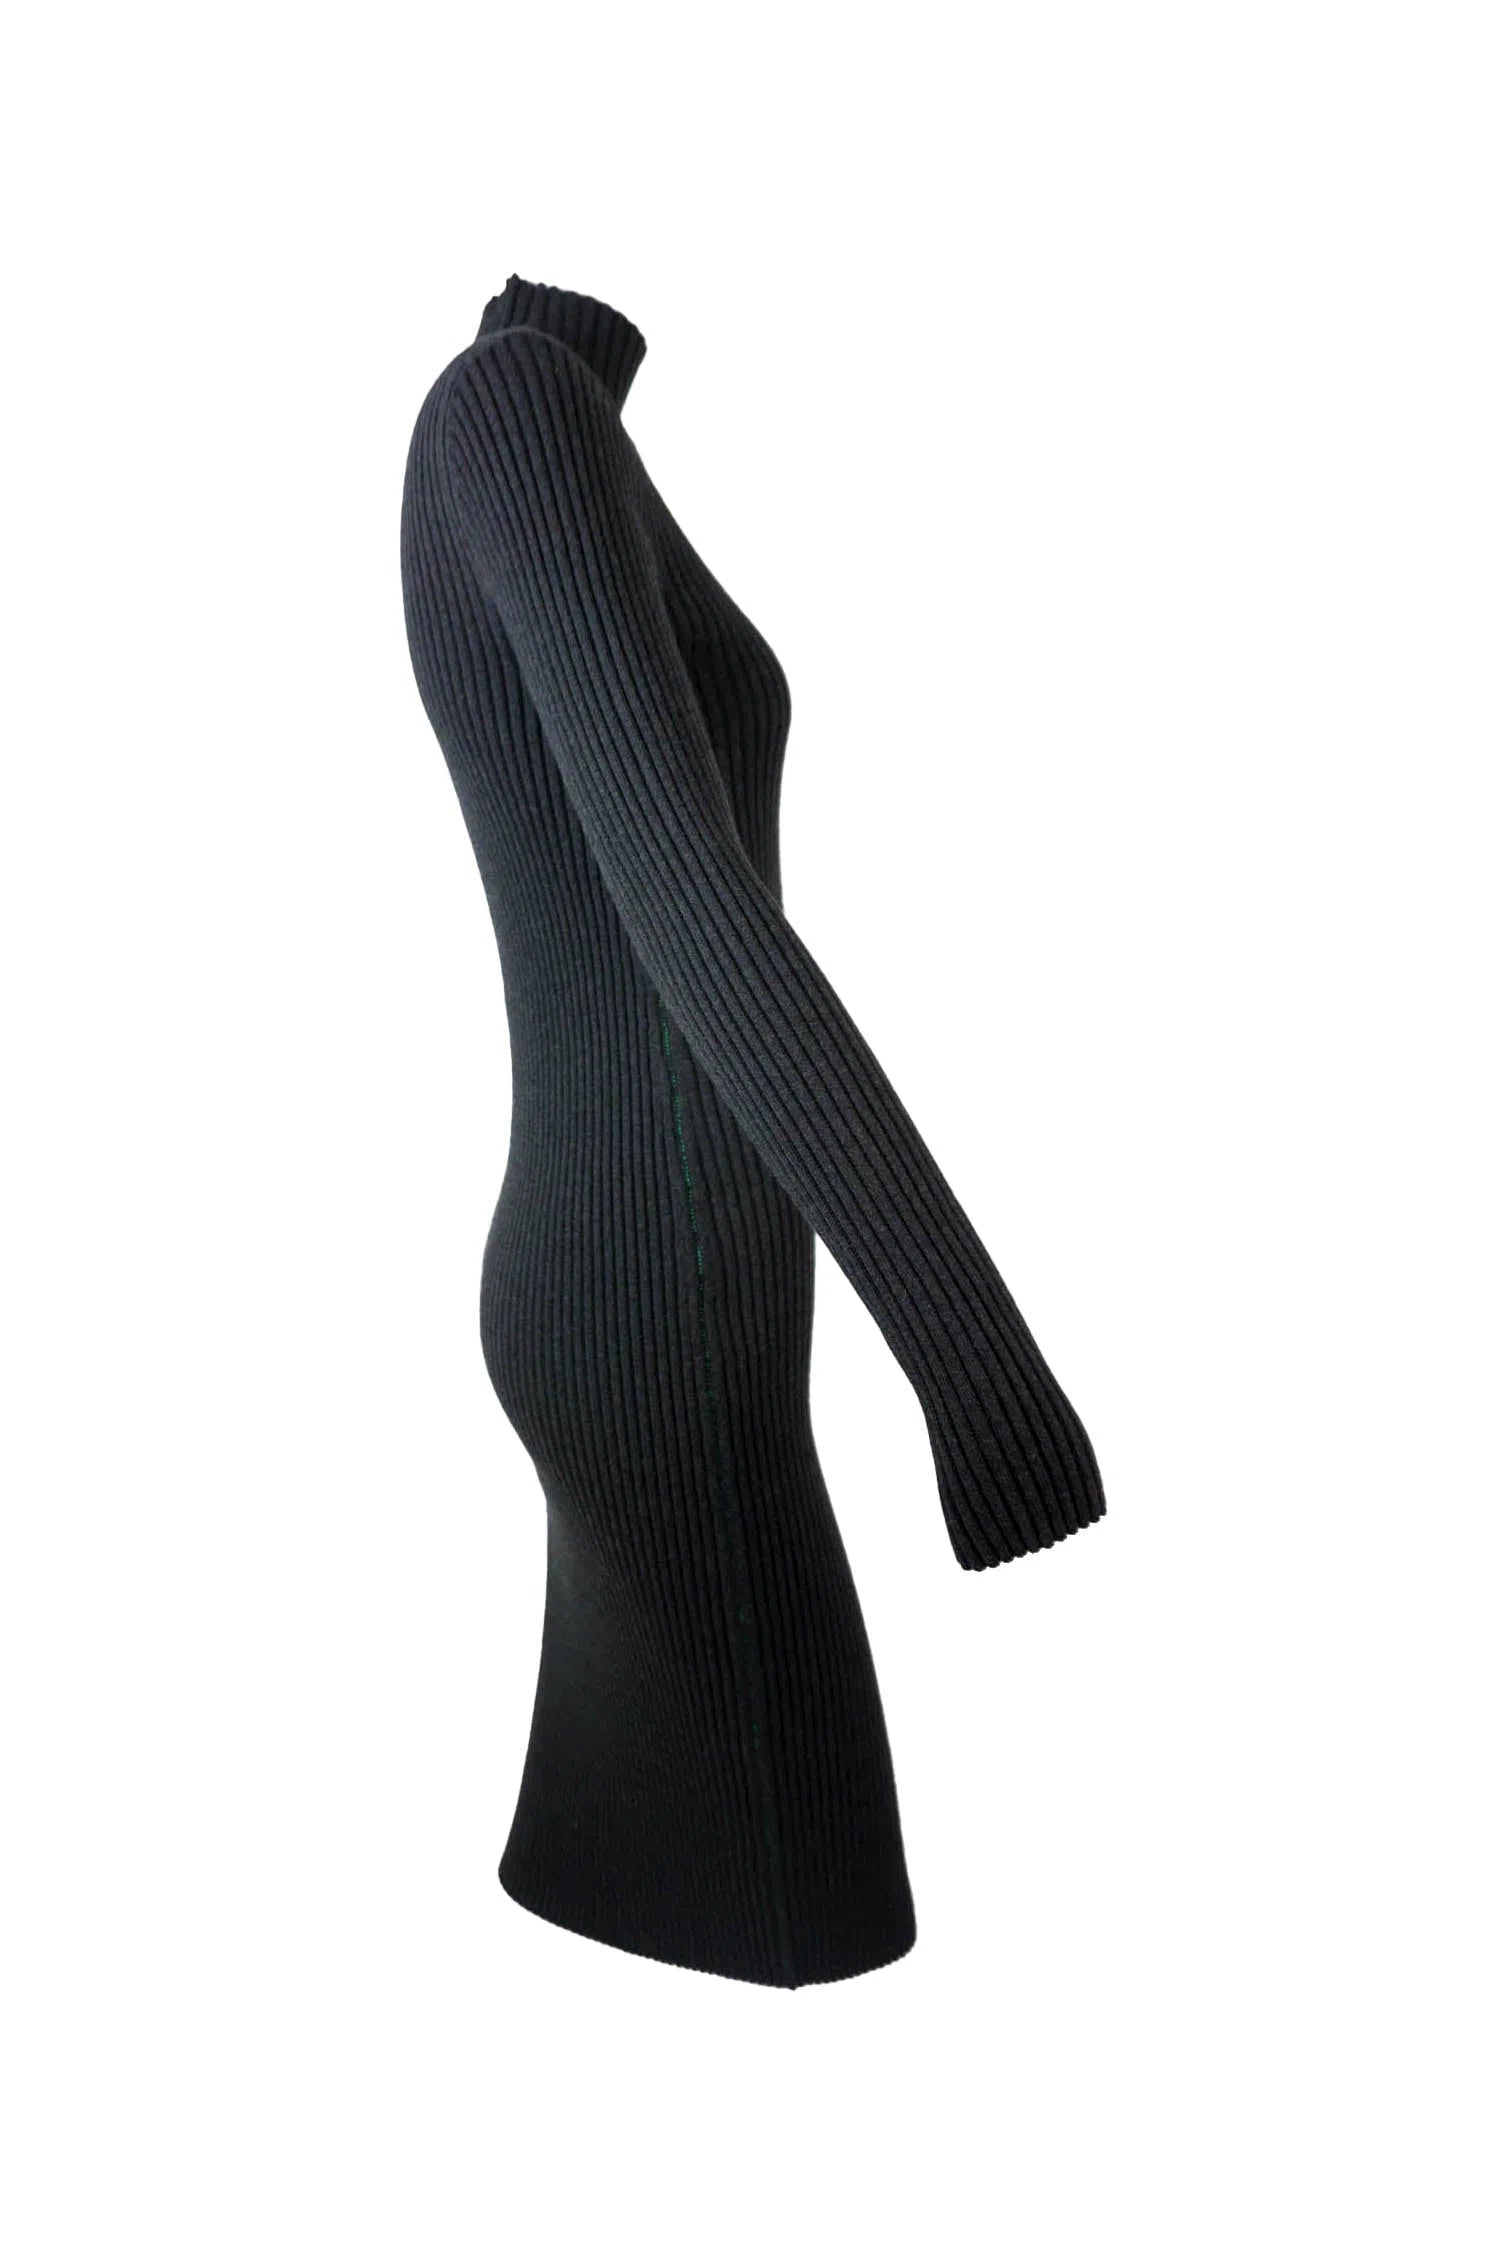 Bottega Veneta Rib Knit Dress NWT - Foxy Couture Carmel